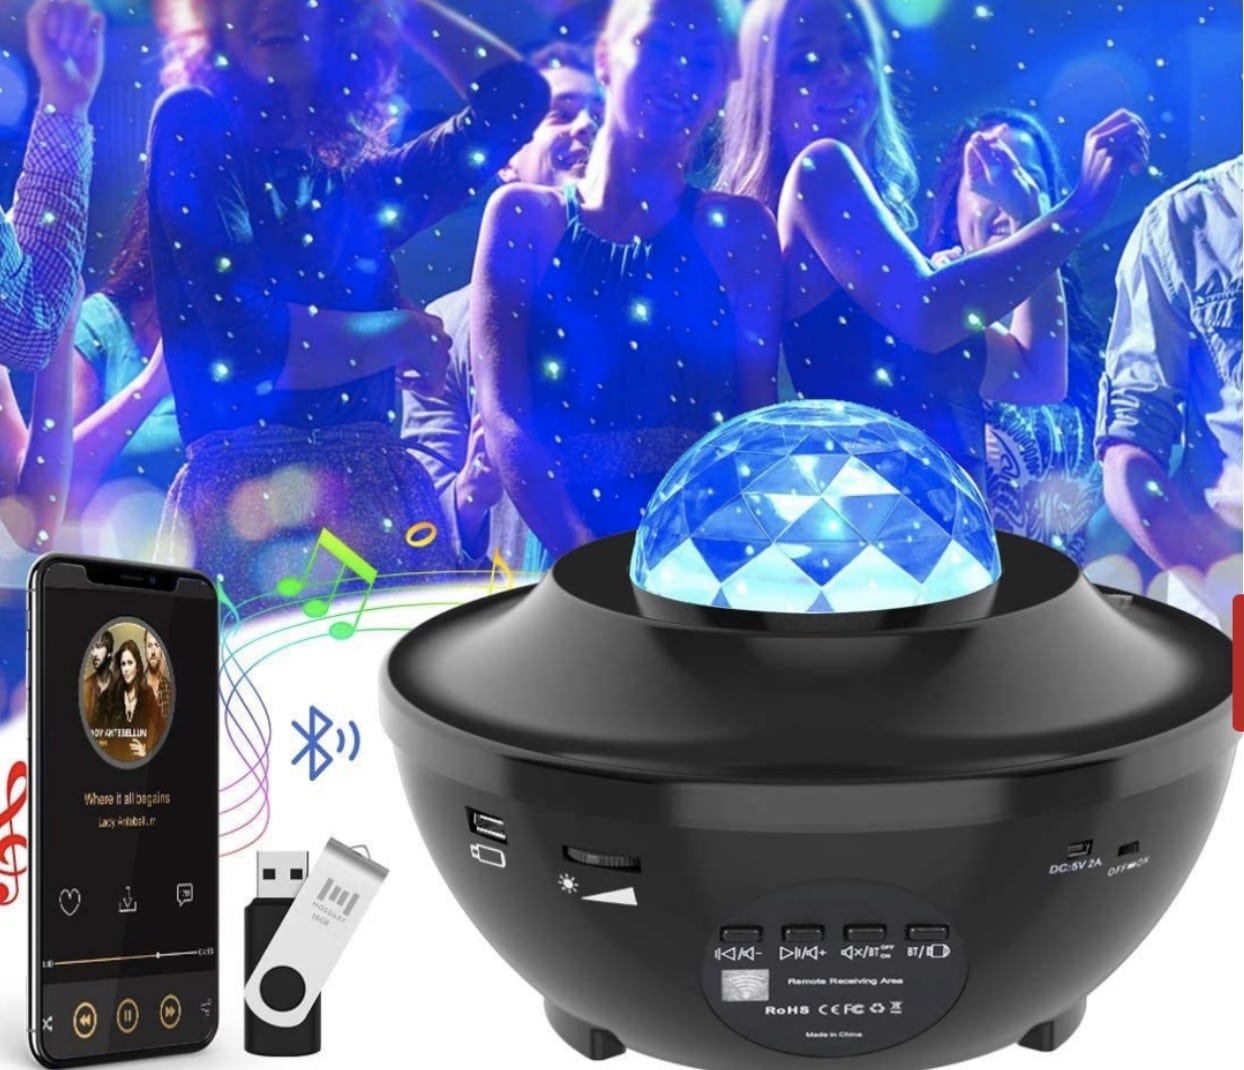 Dreamy™ Galaxy Light Projector - Official Retailer